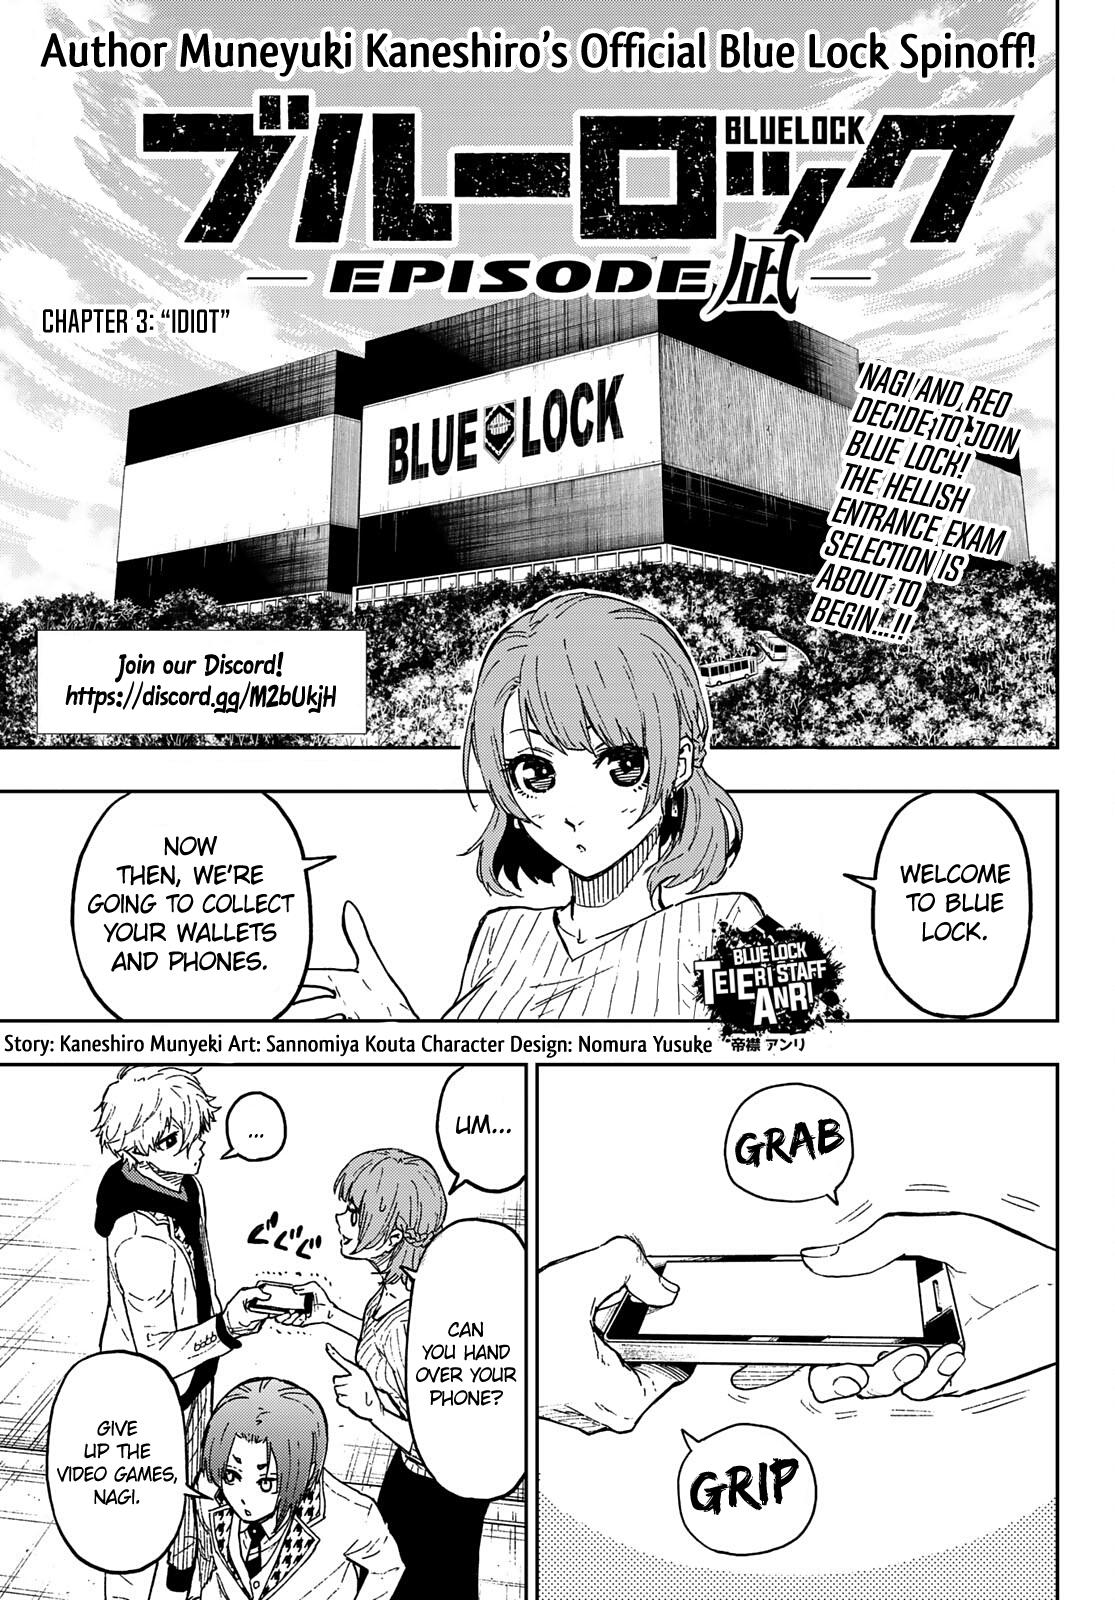 Blue Lock - Episode Nagi Vol.1 Ch.13 Page 25 - Mangago